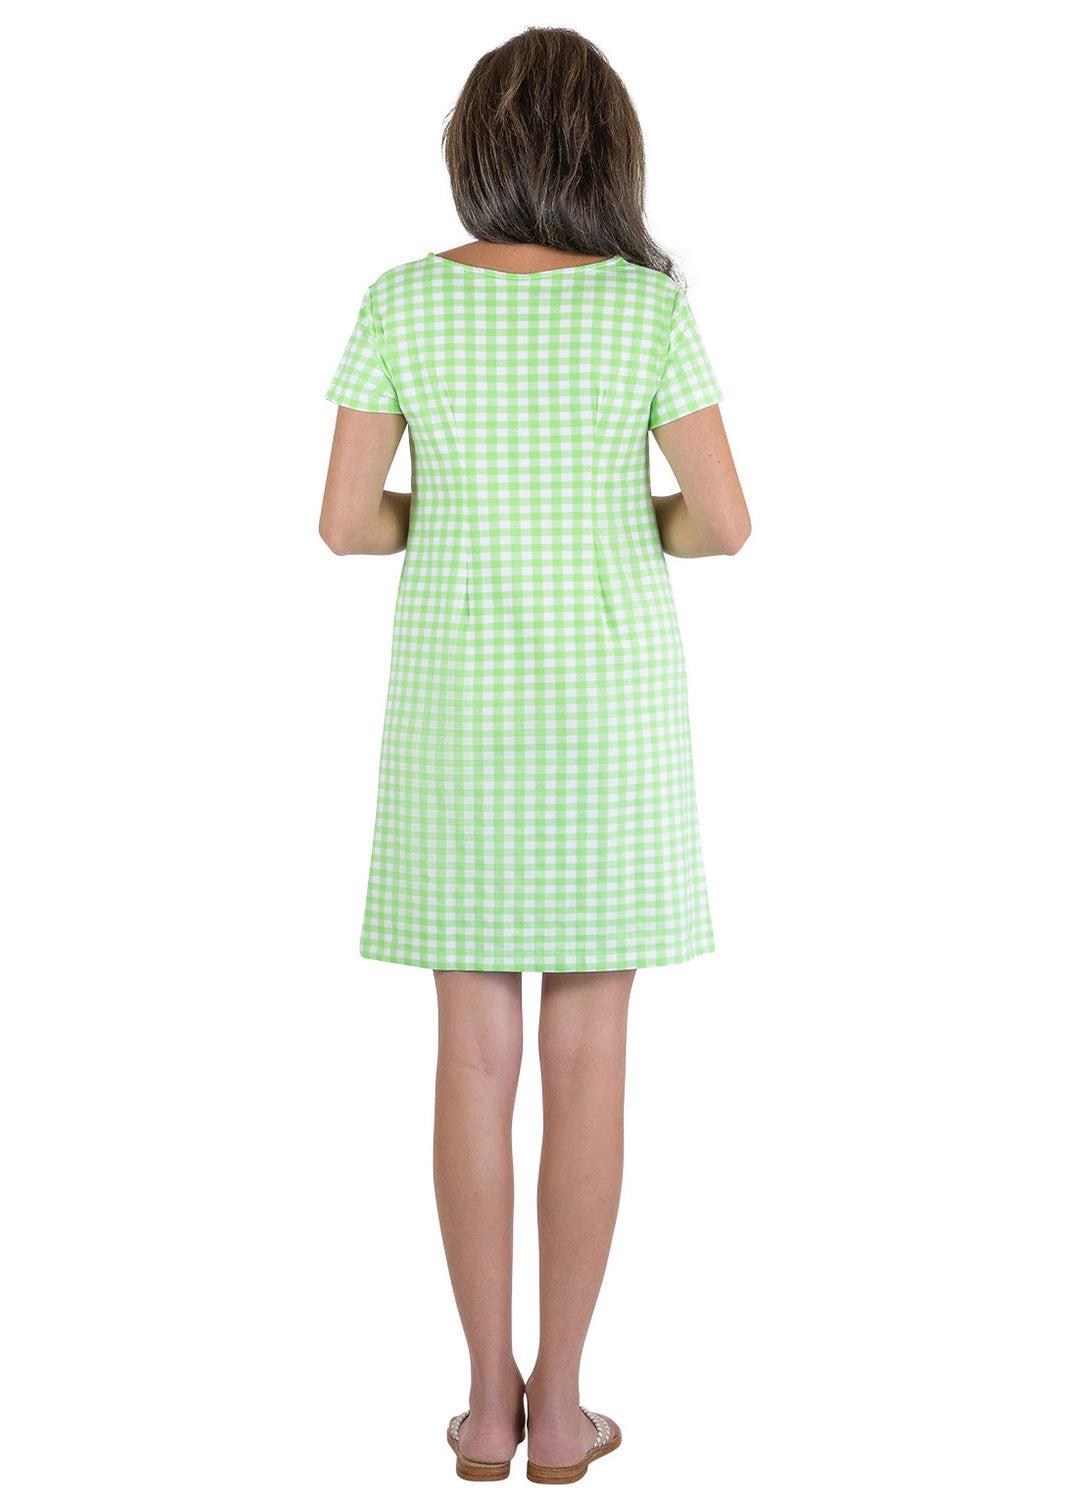 Marina Dress- Gingham Check Green/White - FINAL SALE-2